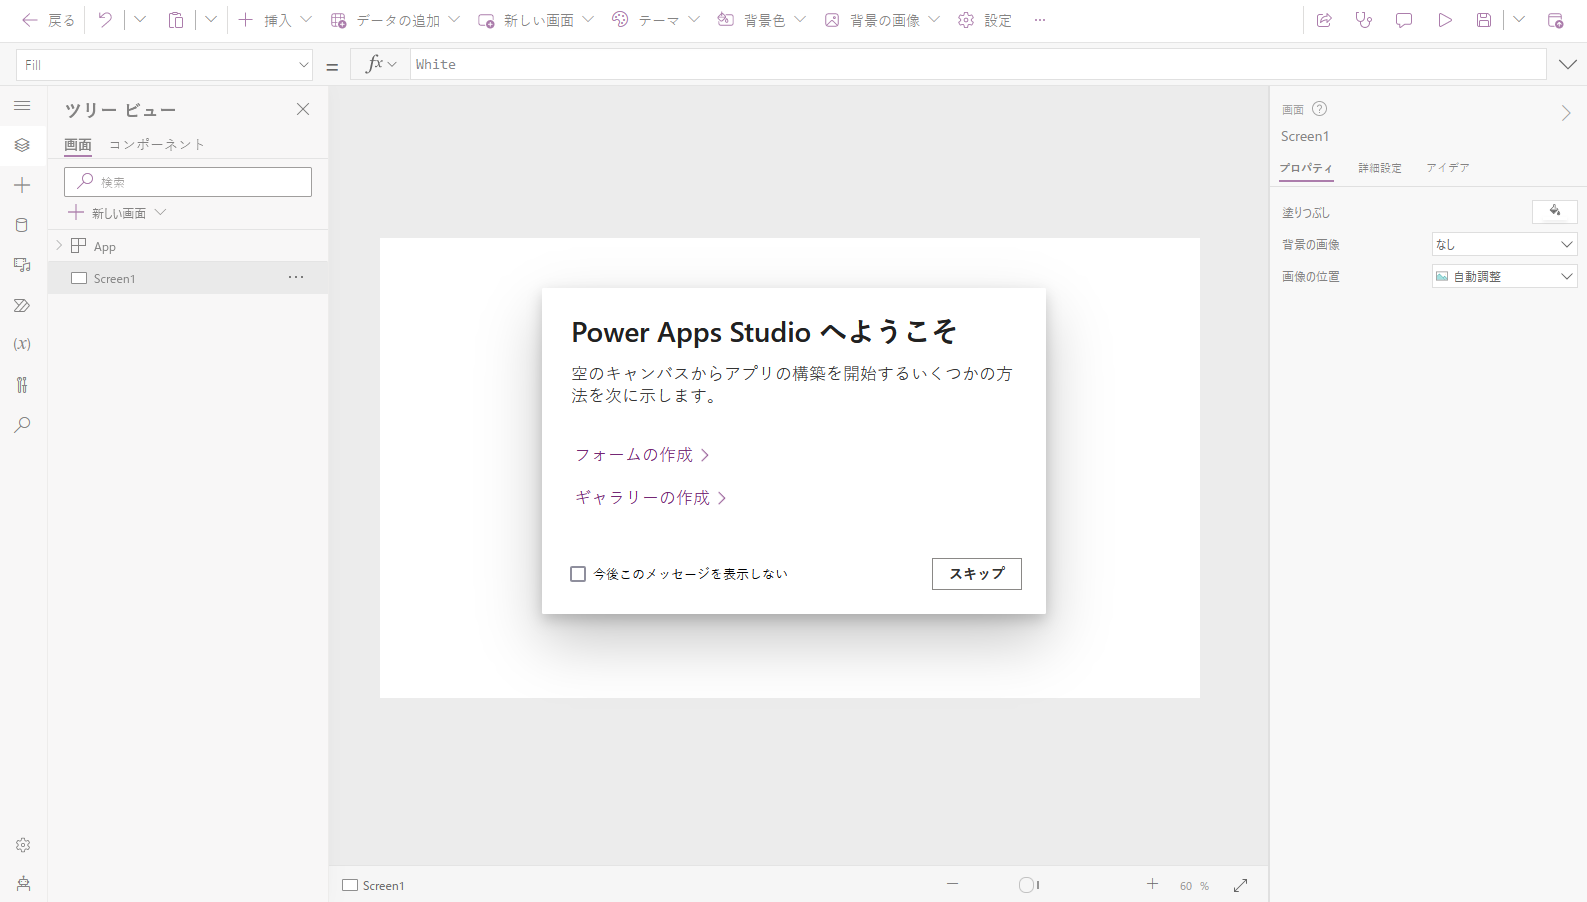 Power Apps Studio を使用してアプリの機能を構成します..